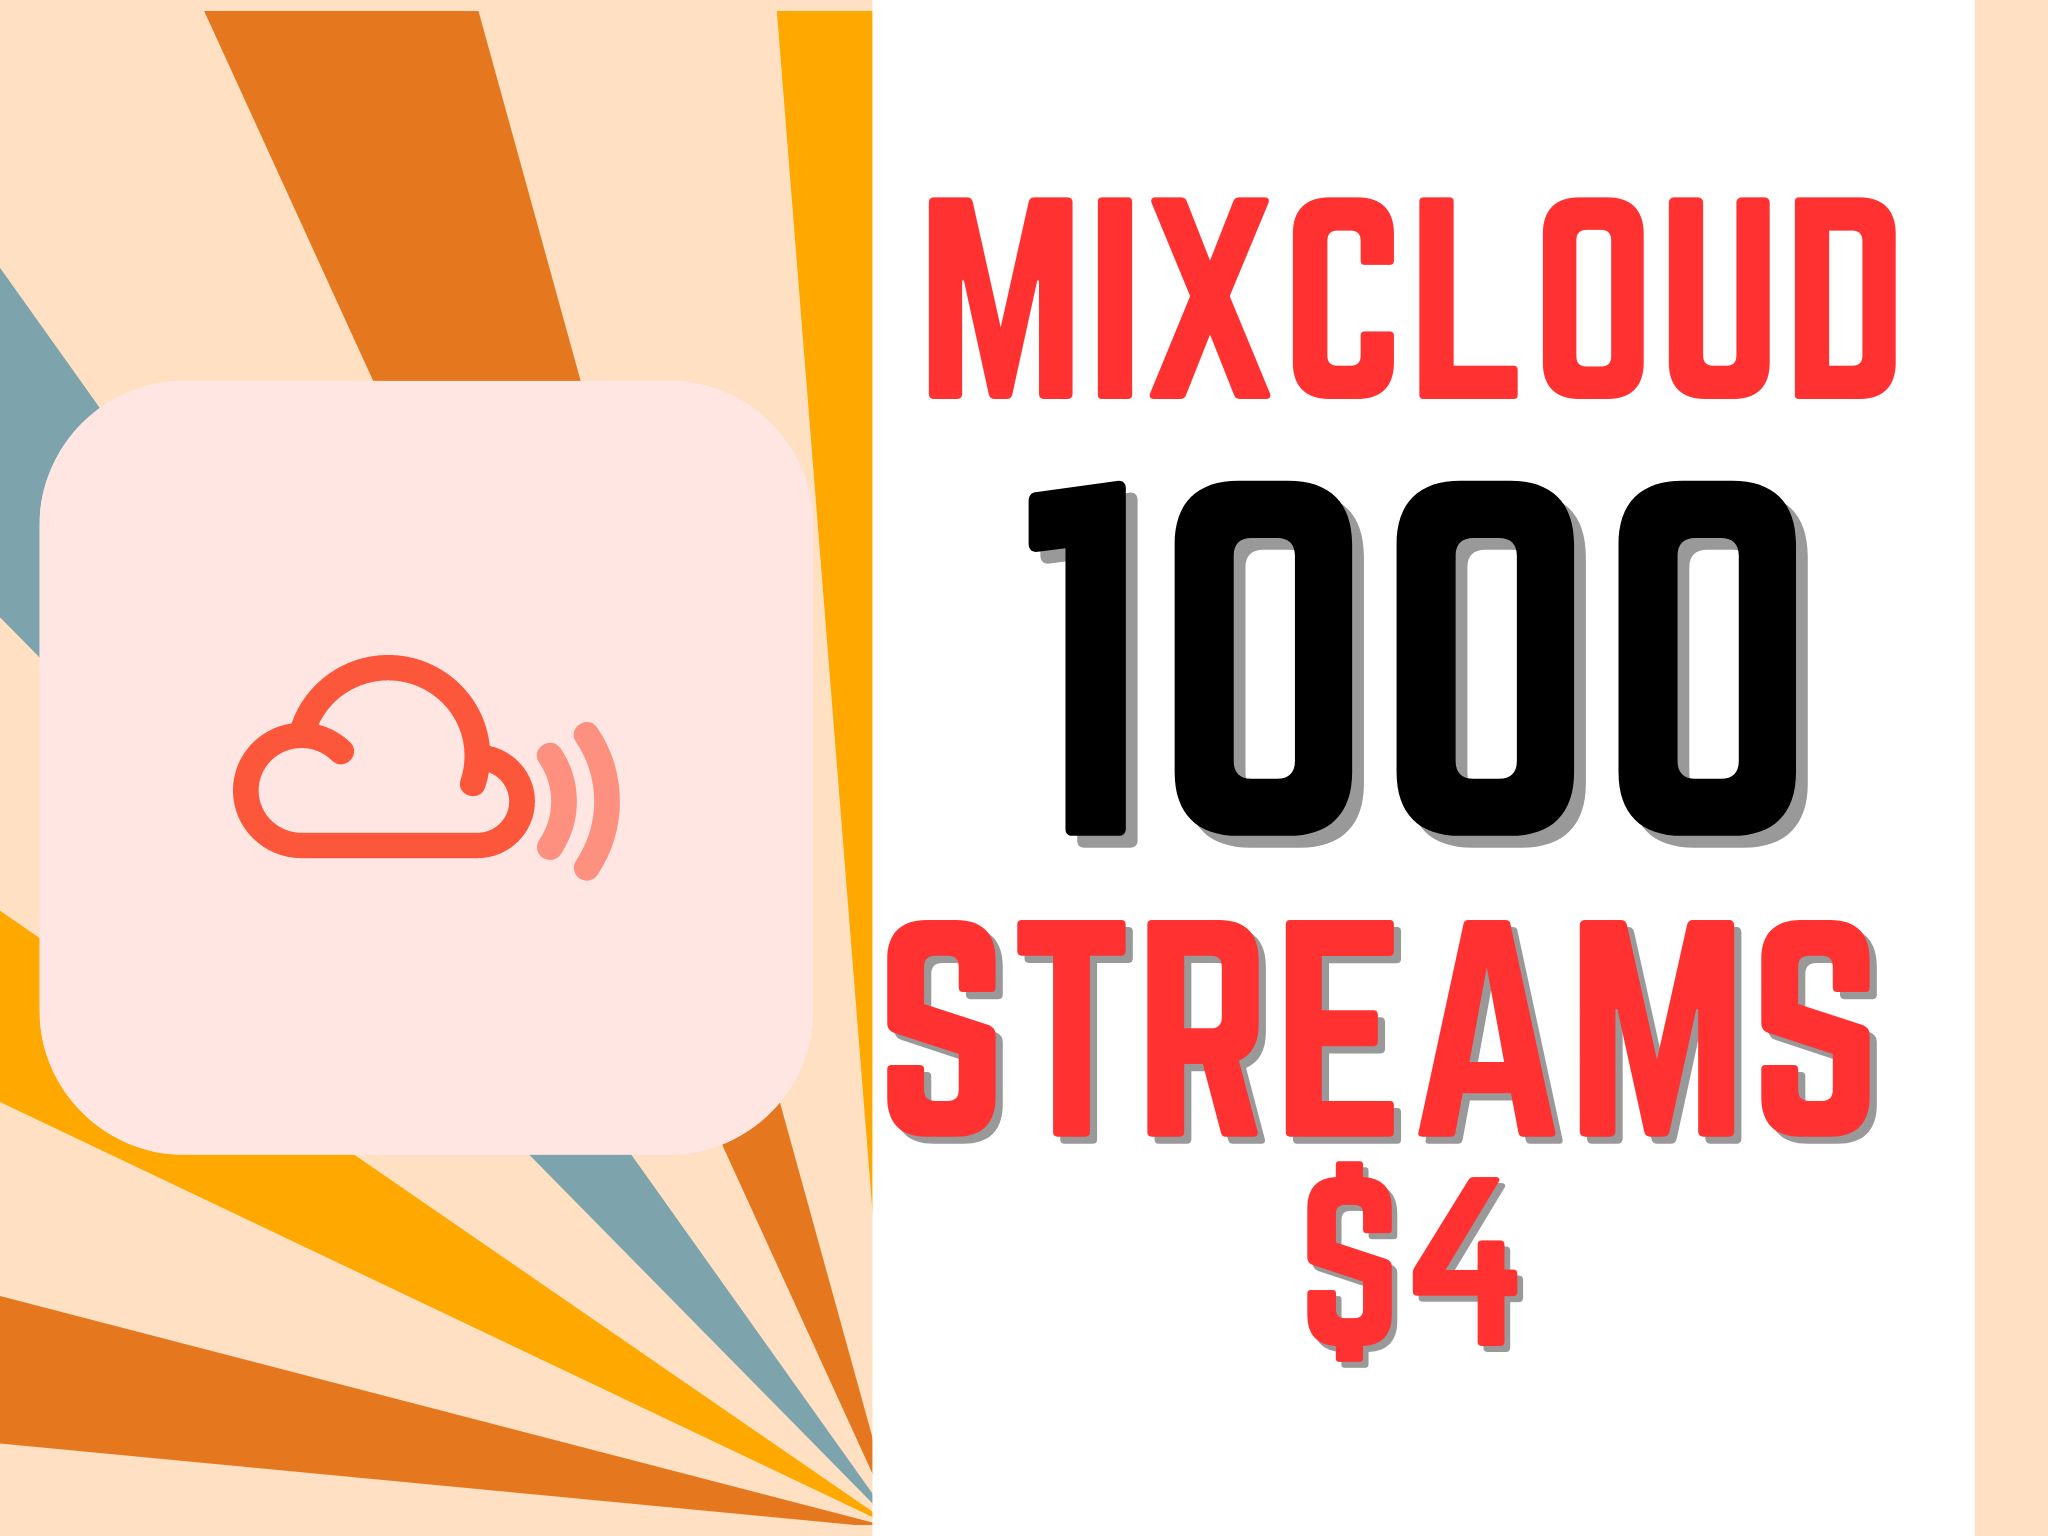 1000 Mixcloud streams organic promotion